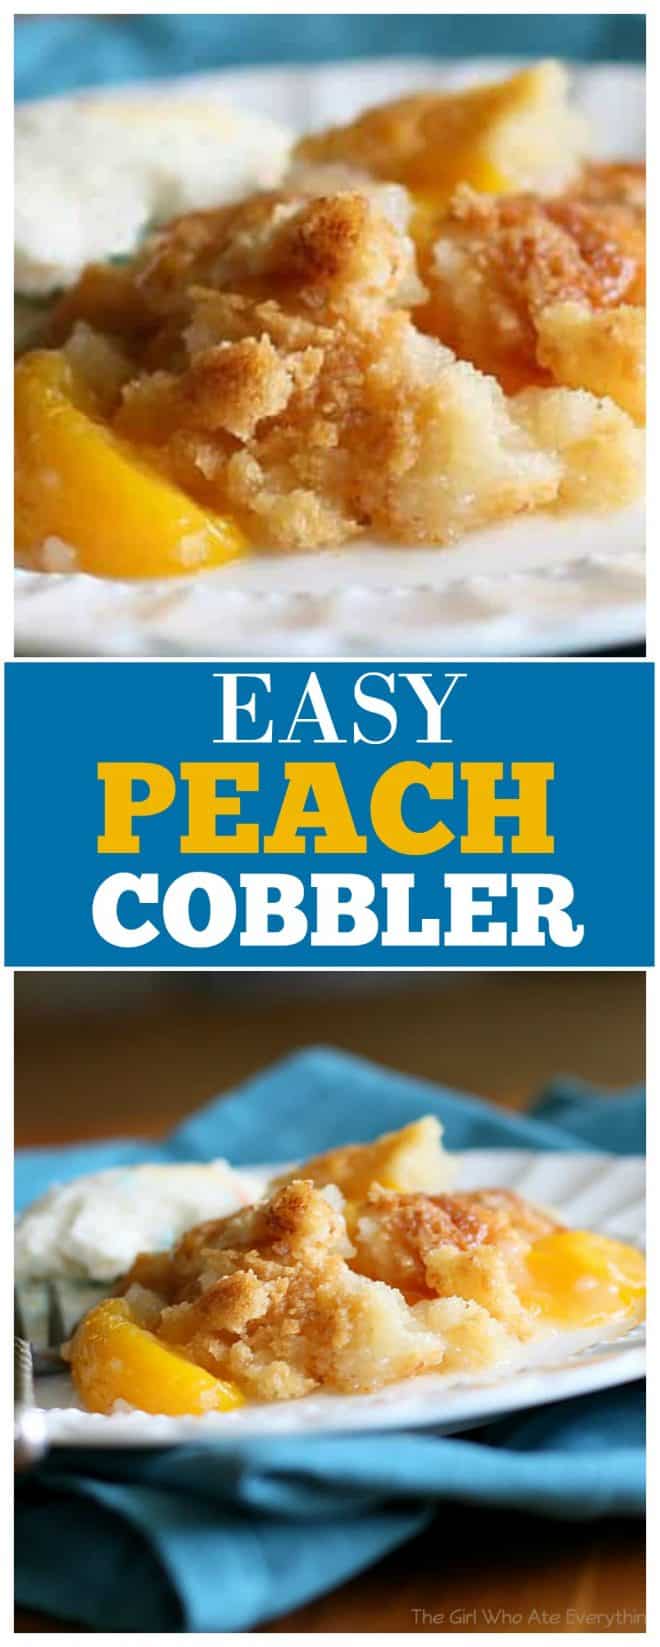 Easy Peach Cobbler